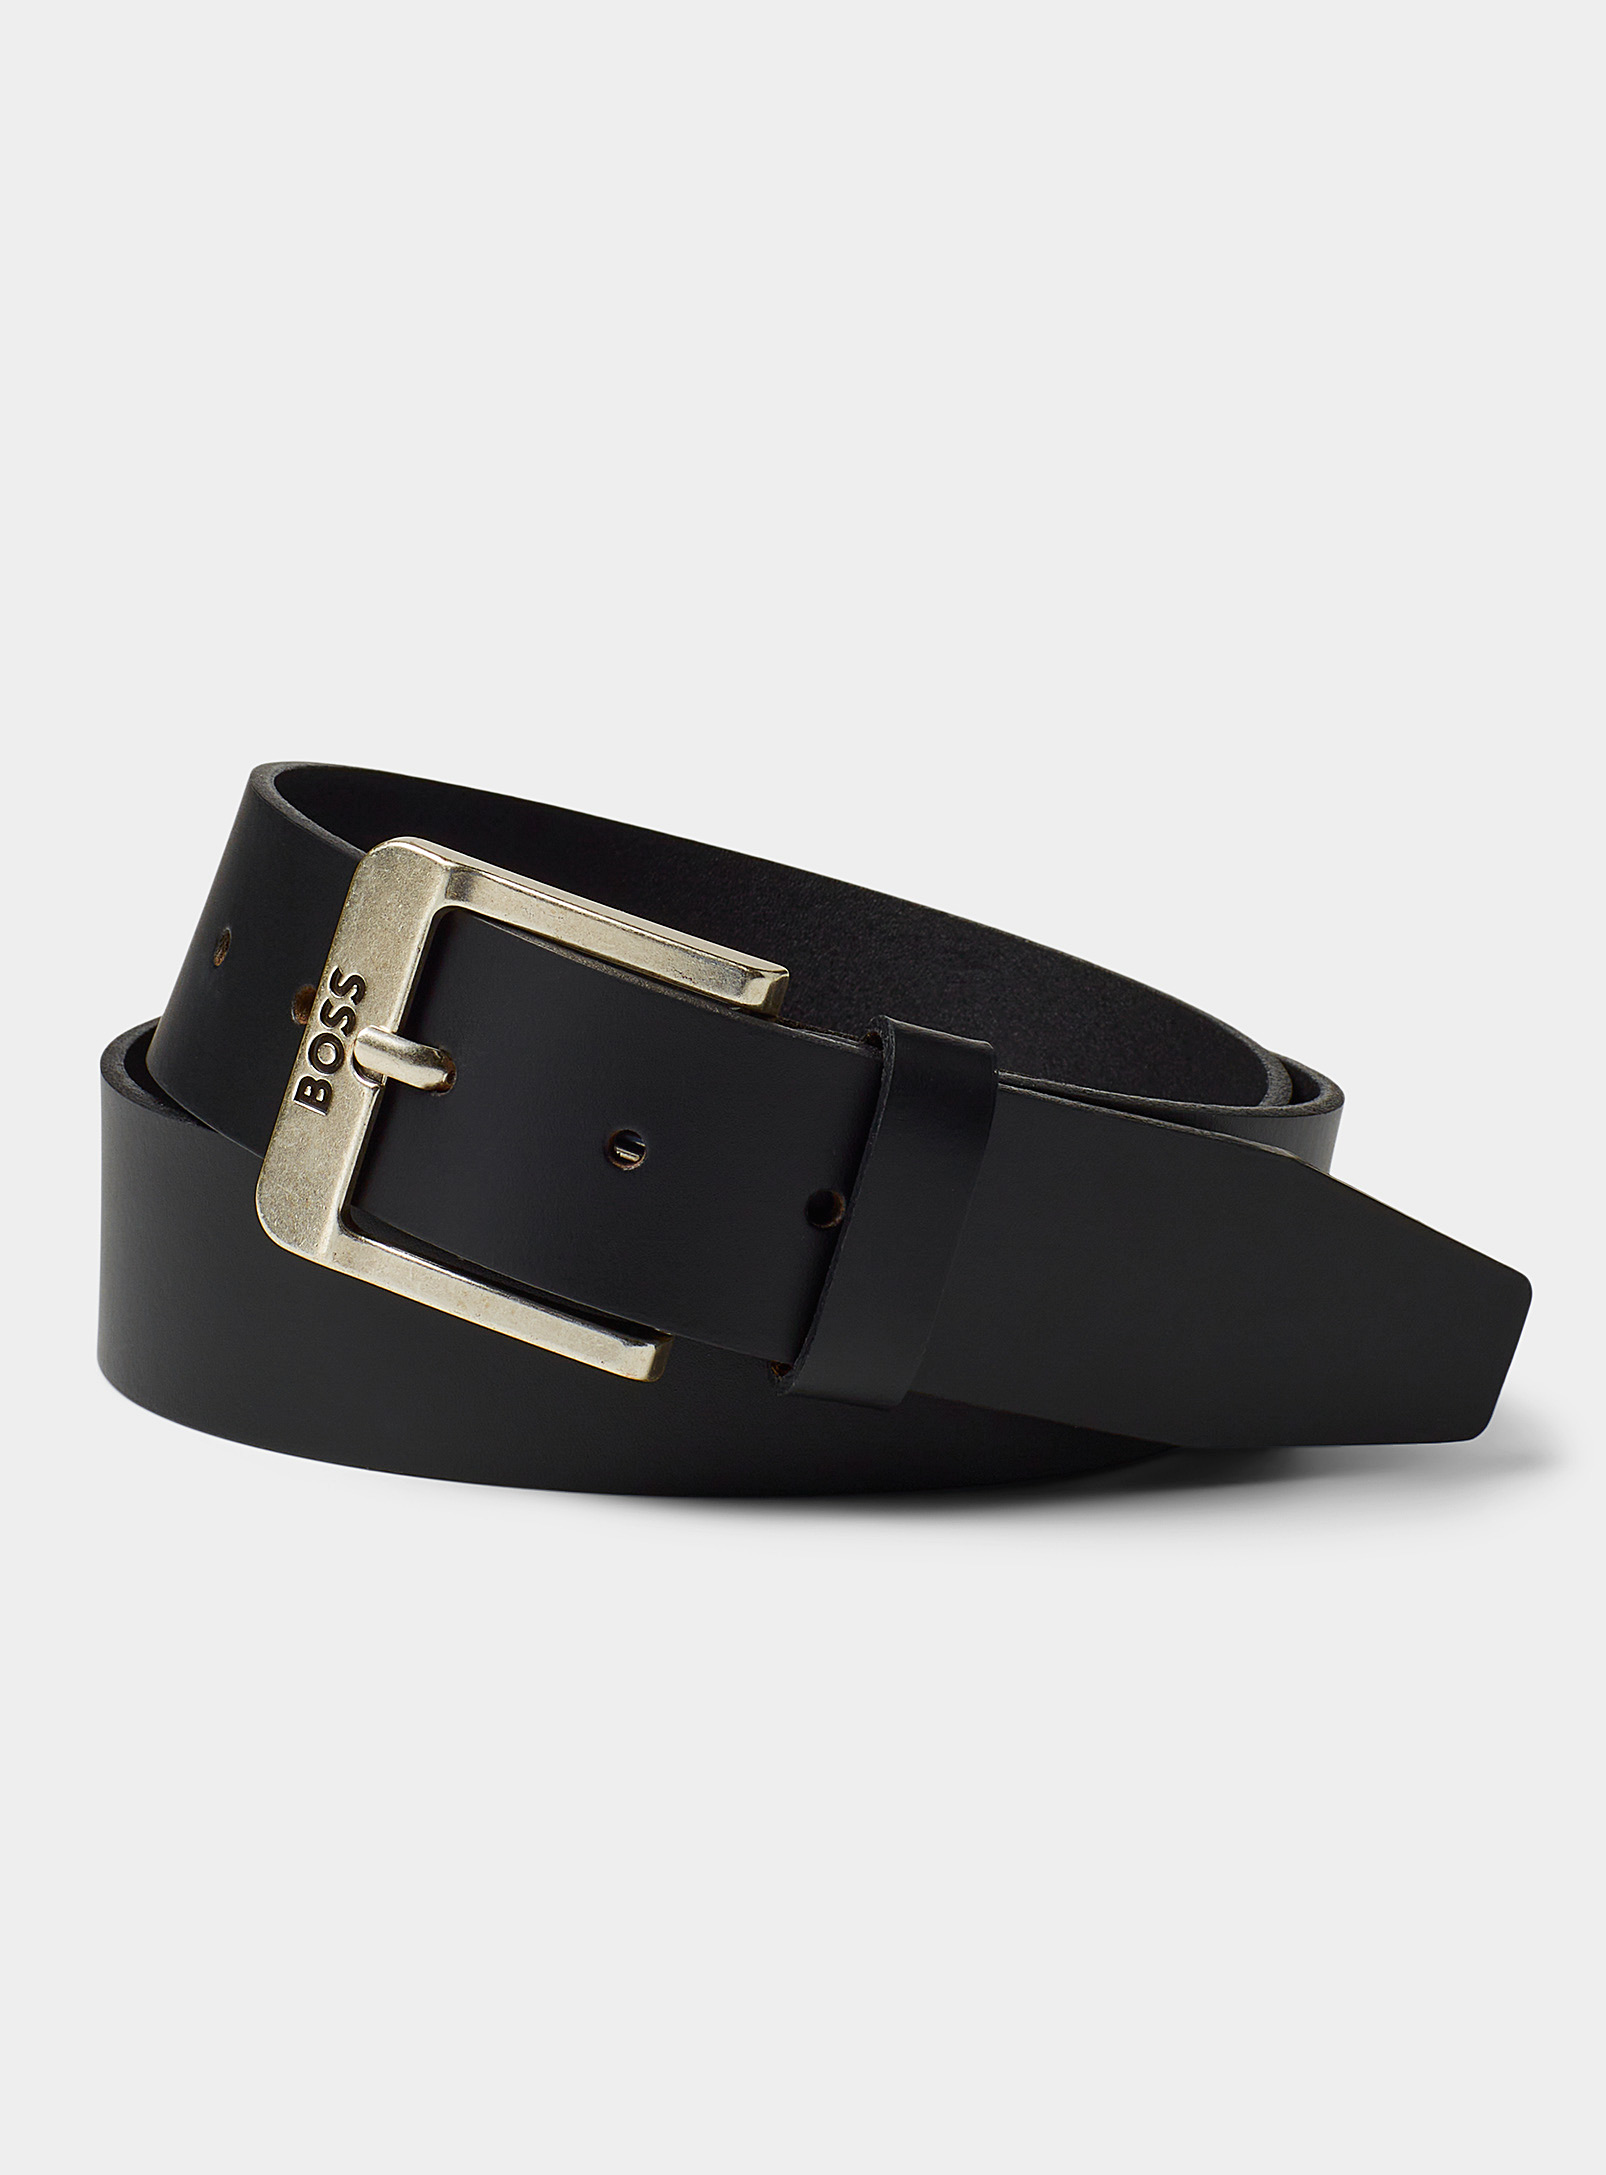 Hugo Boss Jemio Smooth Leather Belt In Black